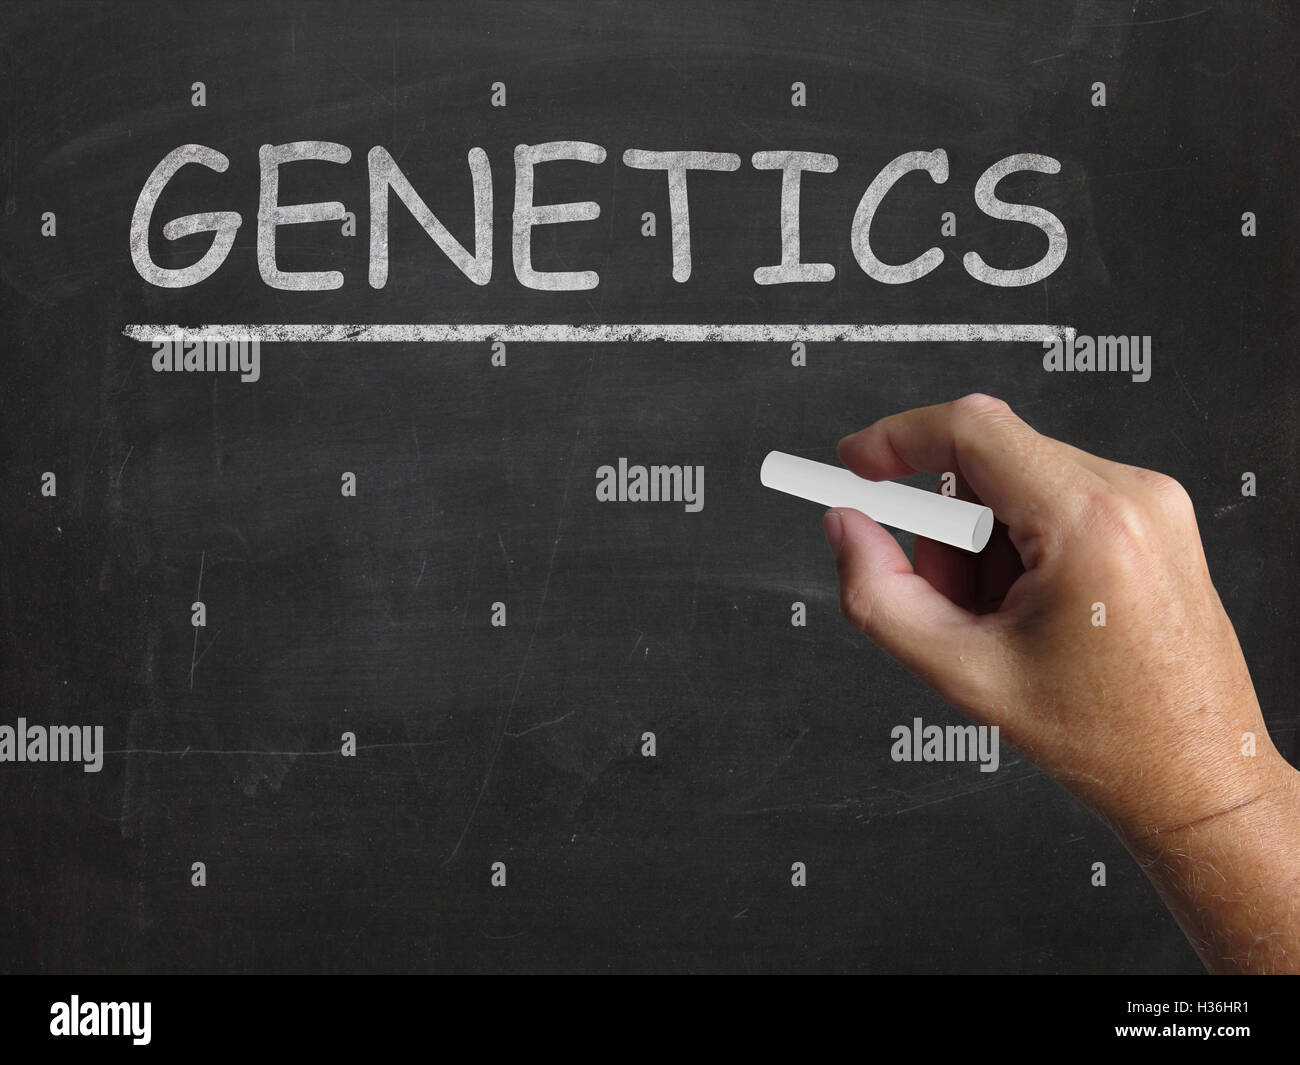 Genetics Blackboard Means Genes DNA And Heredity Stock Photo